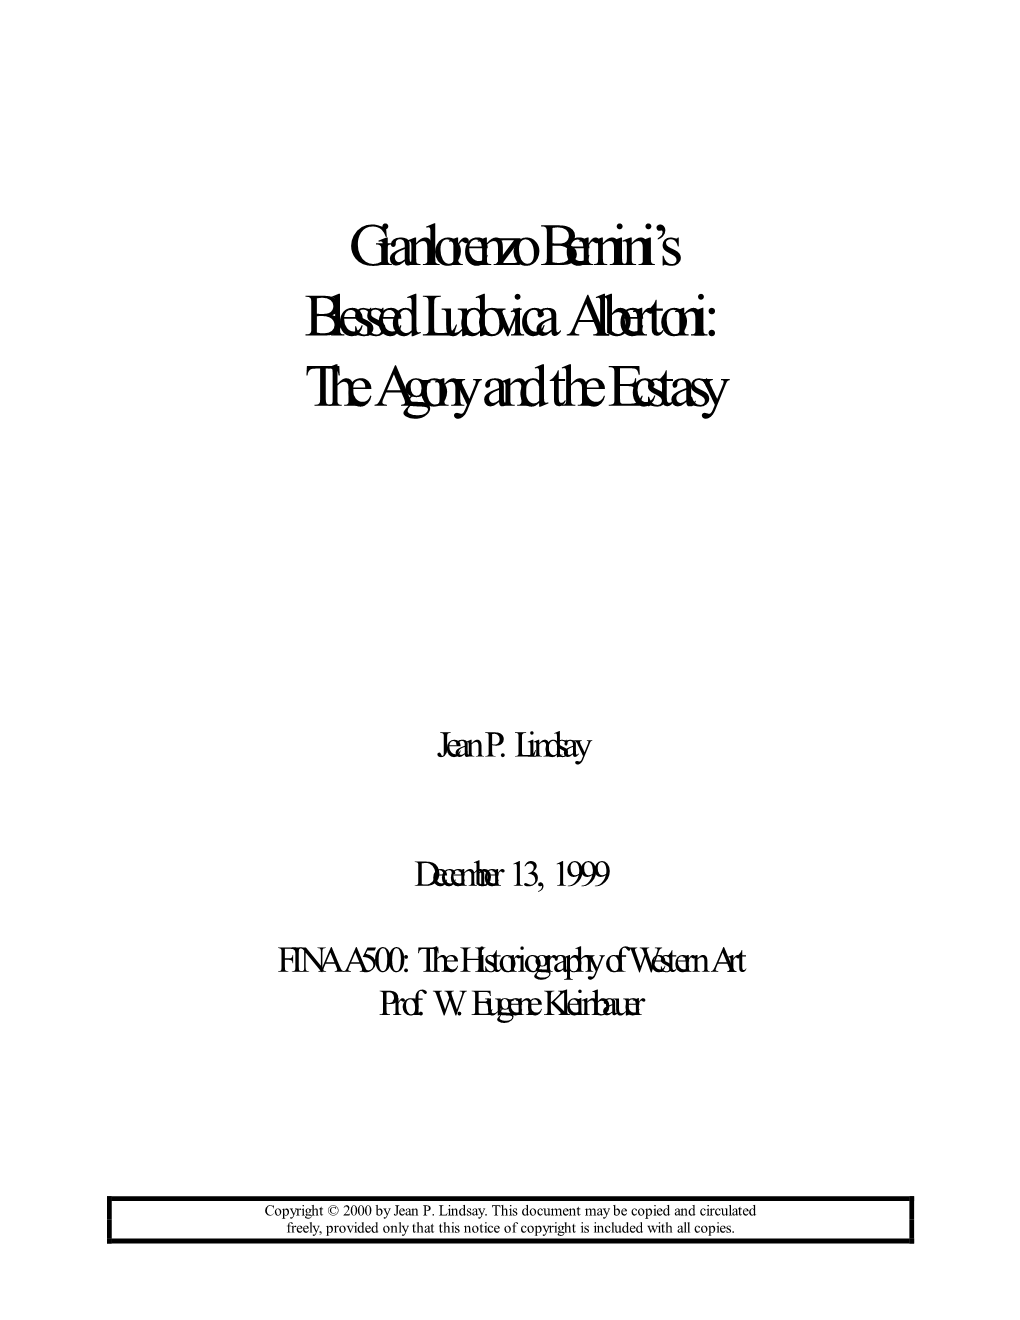 Gianlorenzo Bernini's Blessed Ludovica Albertoni: The